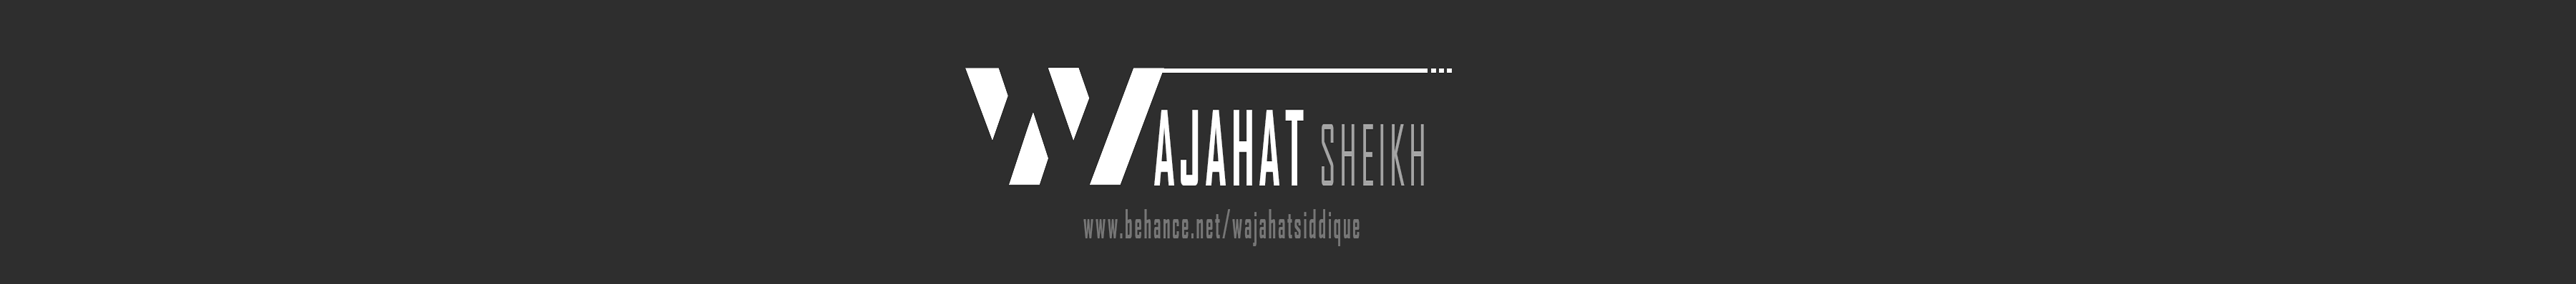 Banner de perfil de Wajahat Sheikh